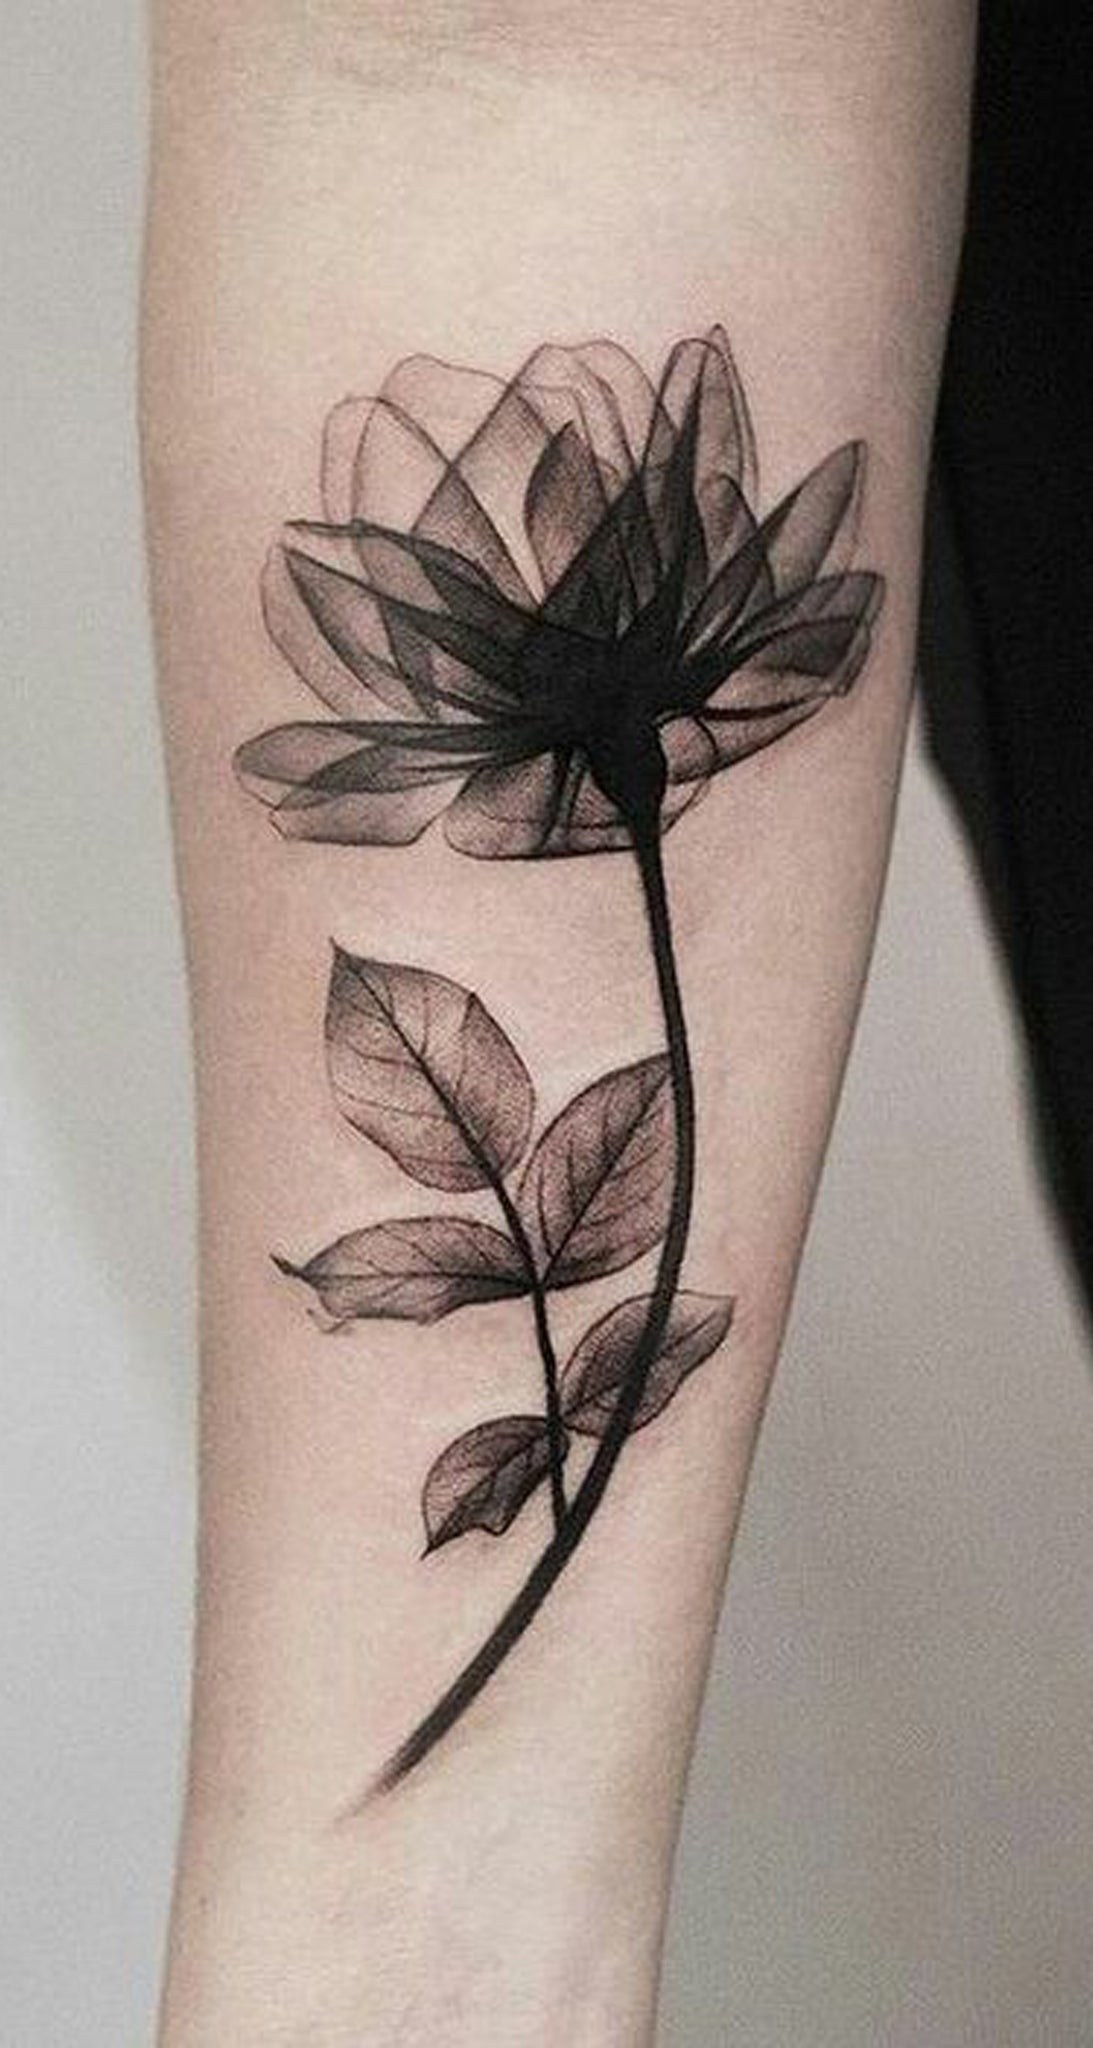 Beautiful Black Magnolia Arm Tattoo Ideas for Women - Watercolor Delicate Forearm Tat - www.MyBodiArt.com #tattoos